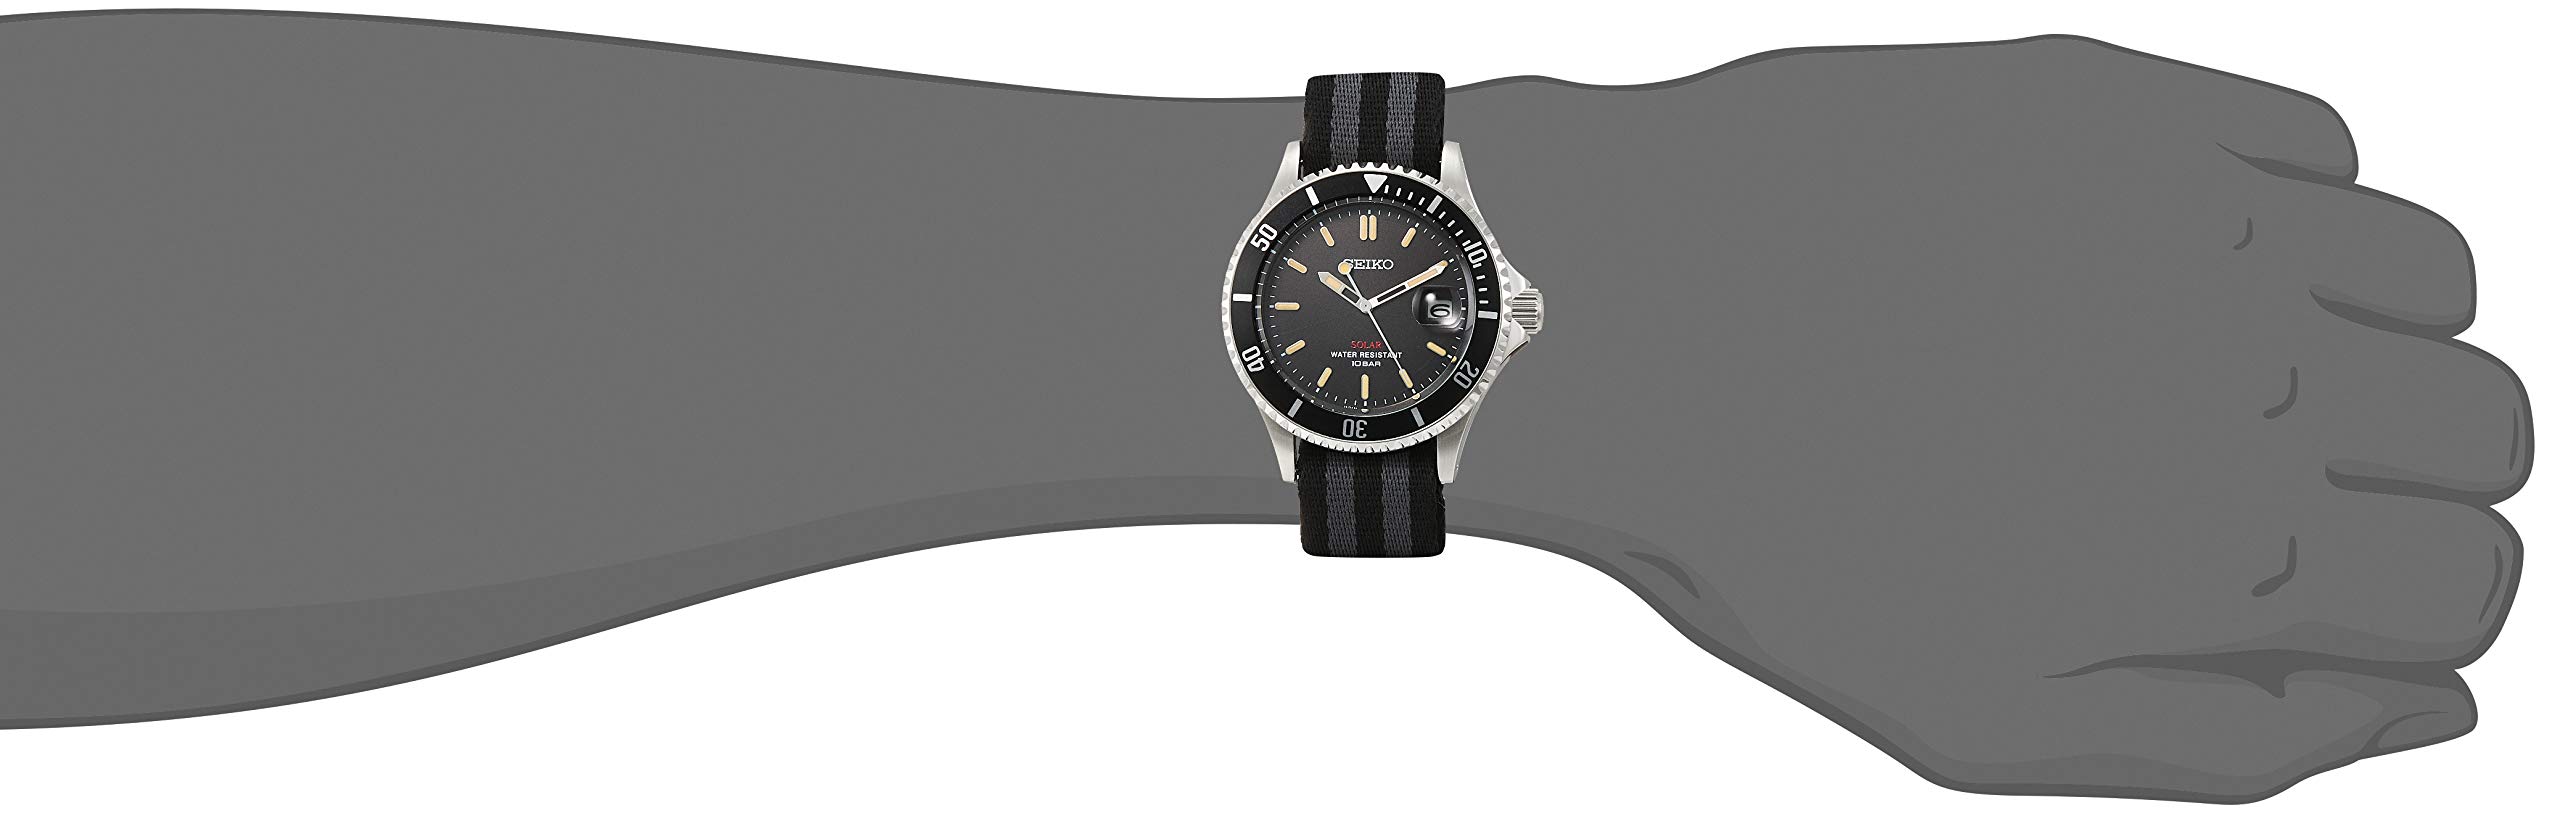 Seiko SZEV014 Men's Wristwatch, Vintage Design, Solar, Shop Limited Model